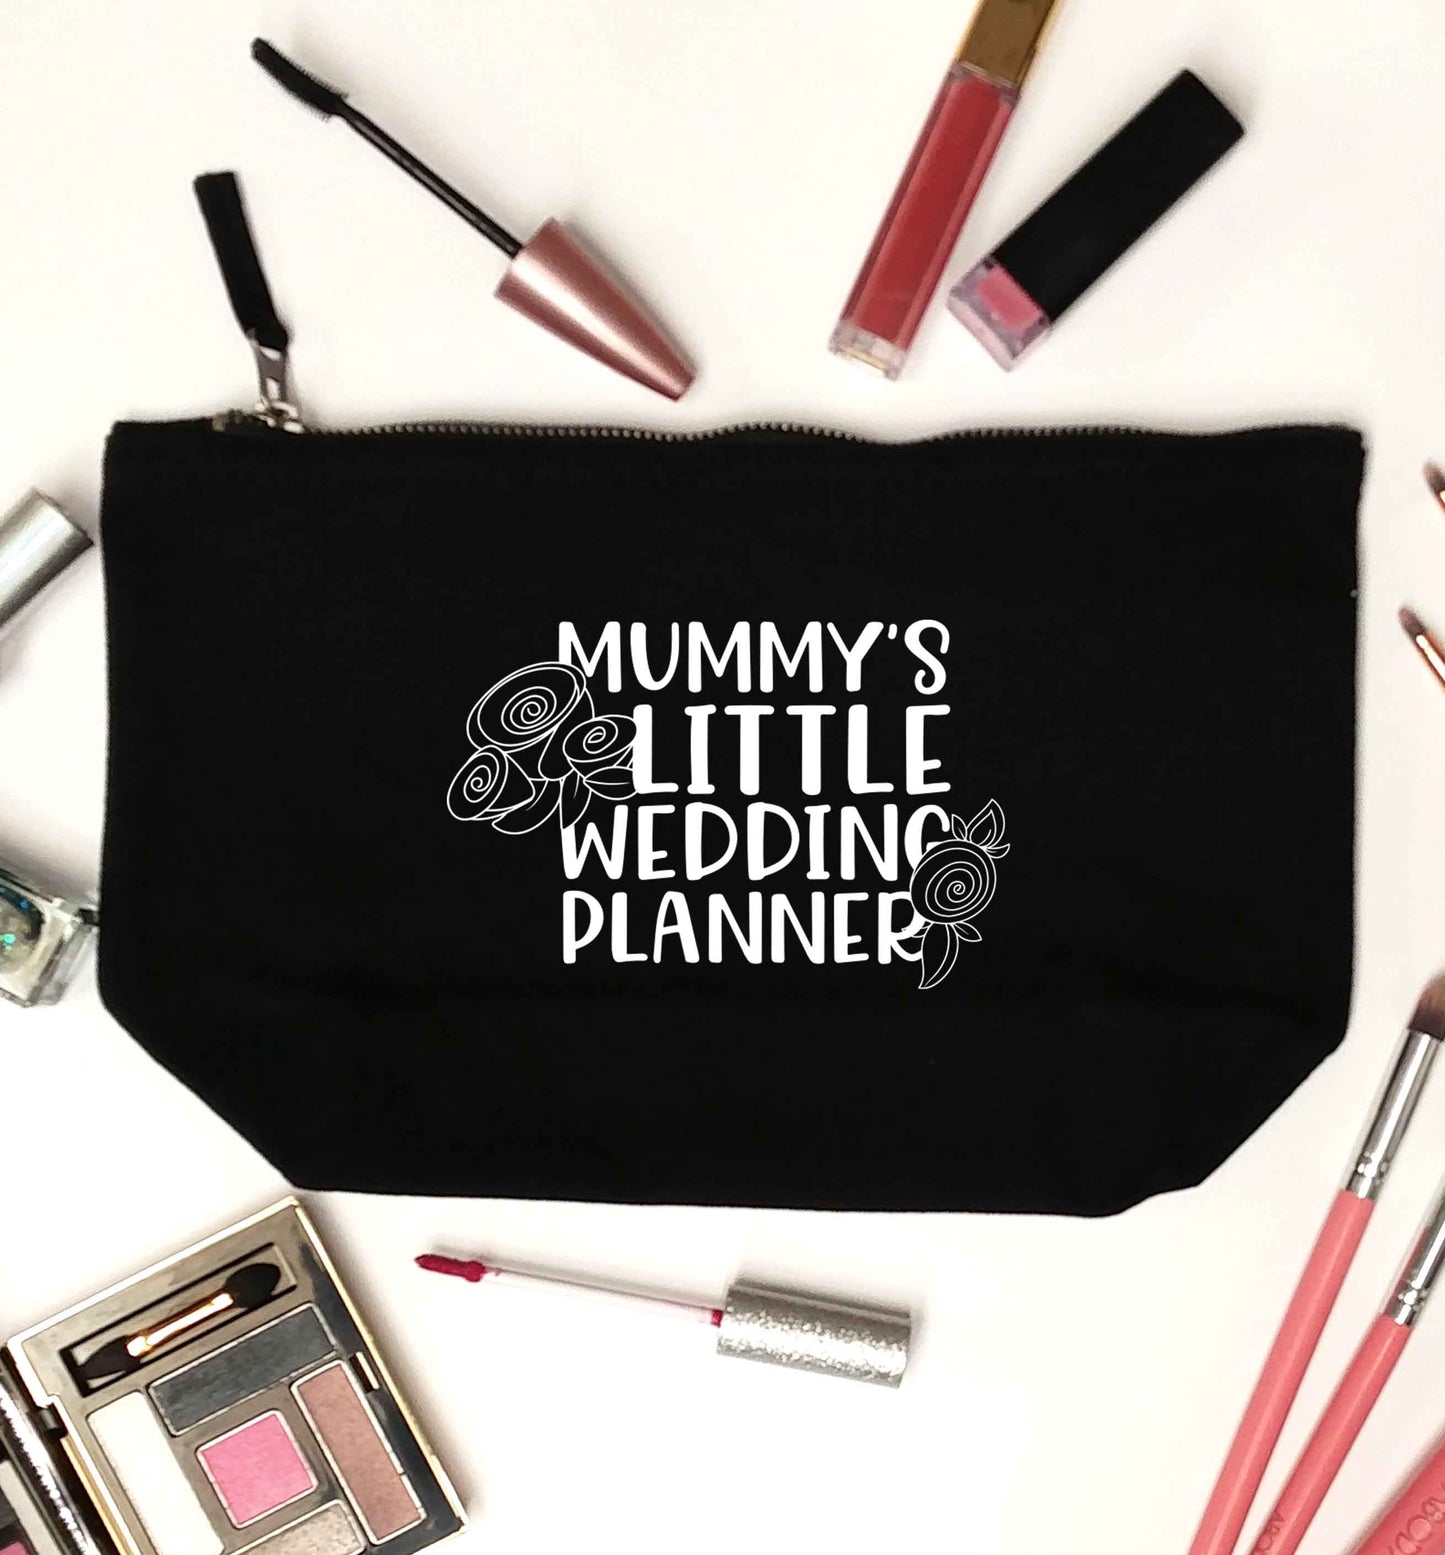 adorable wedding themed gifts for your mini wedding planner! black makeup bag